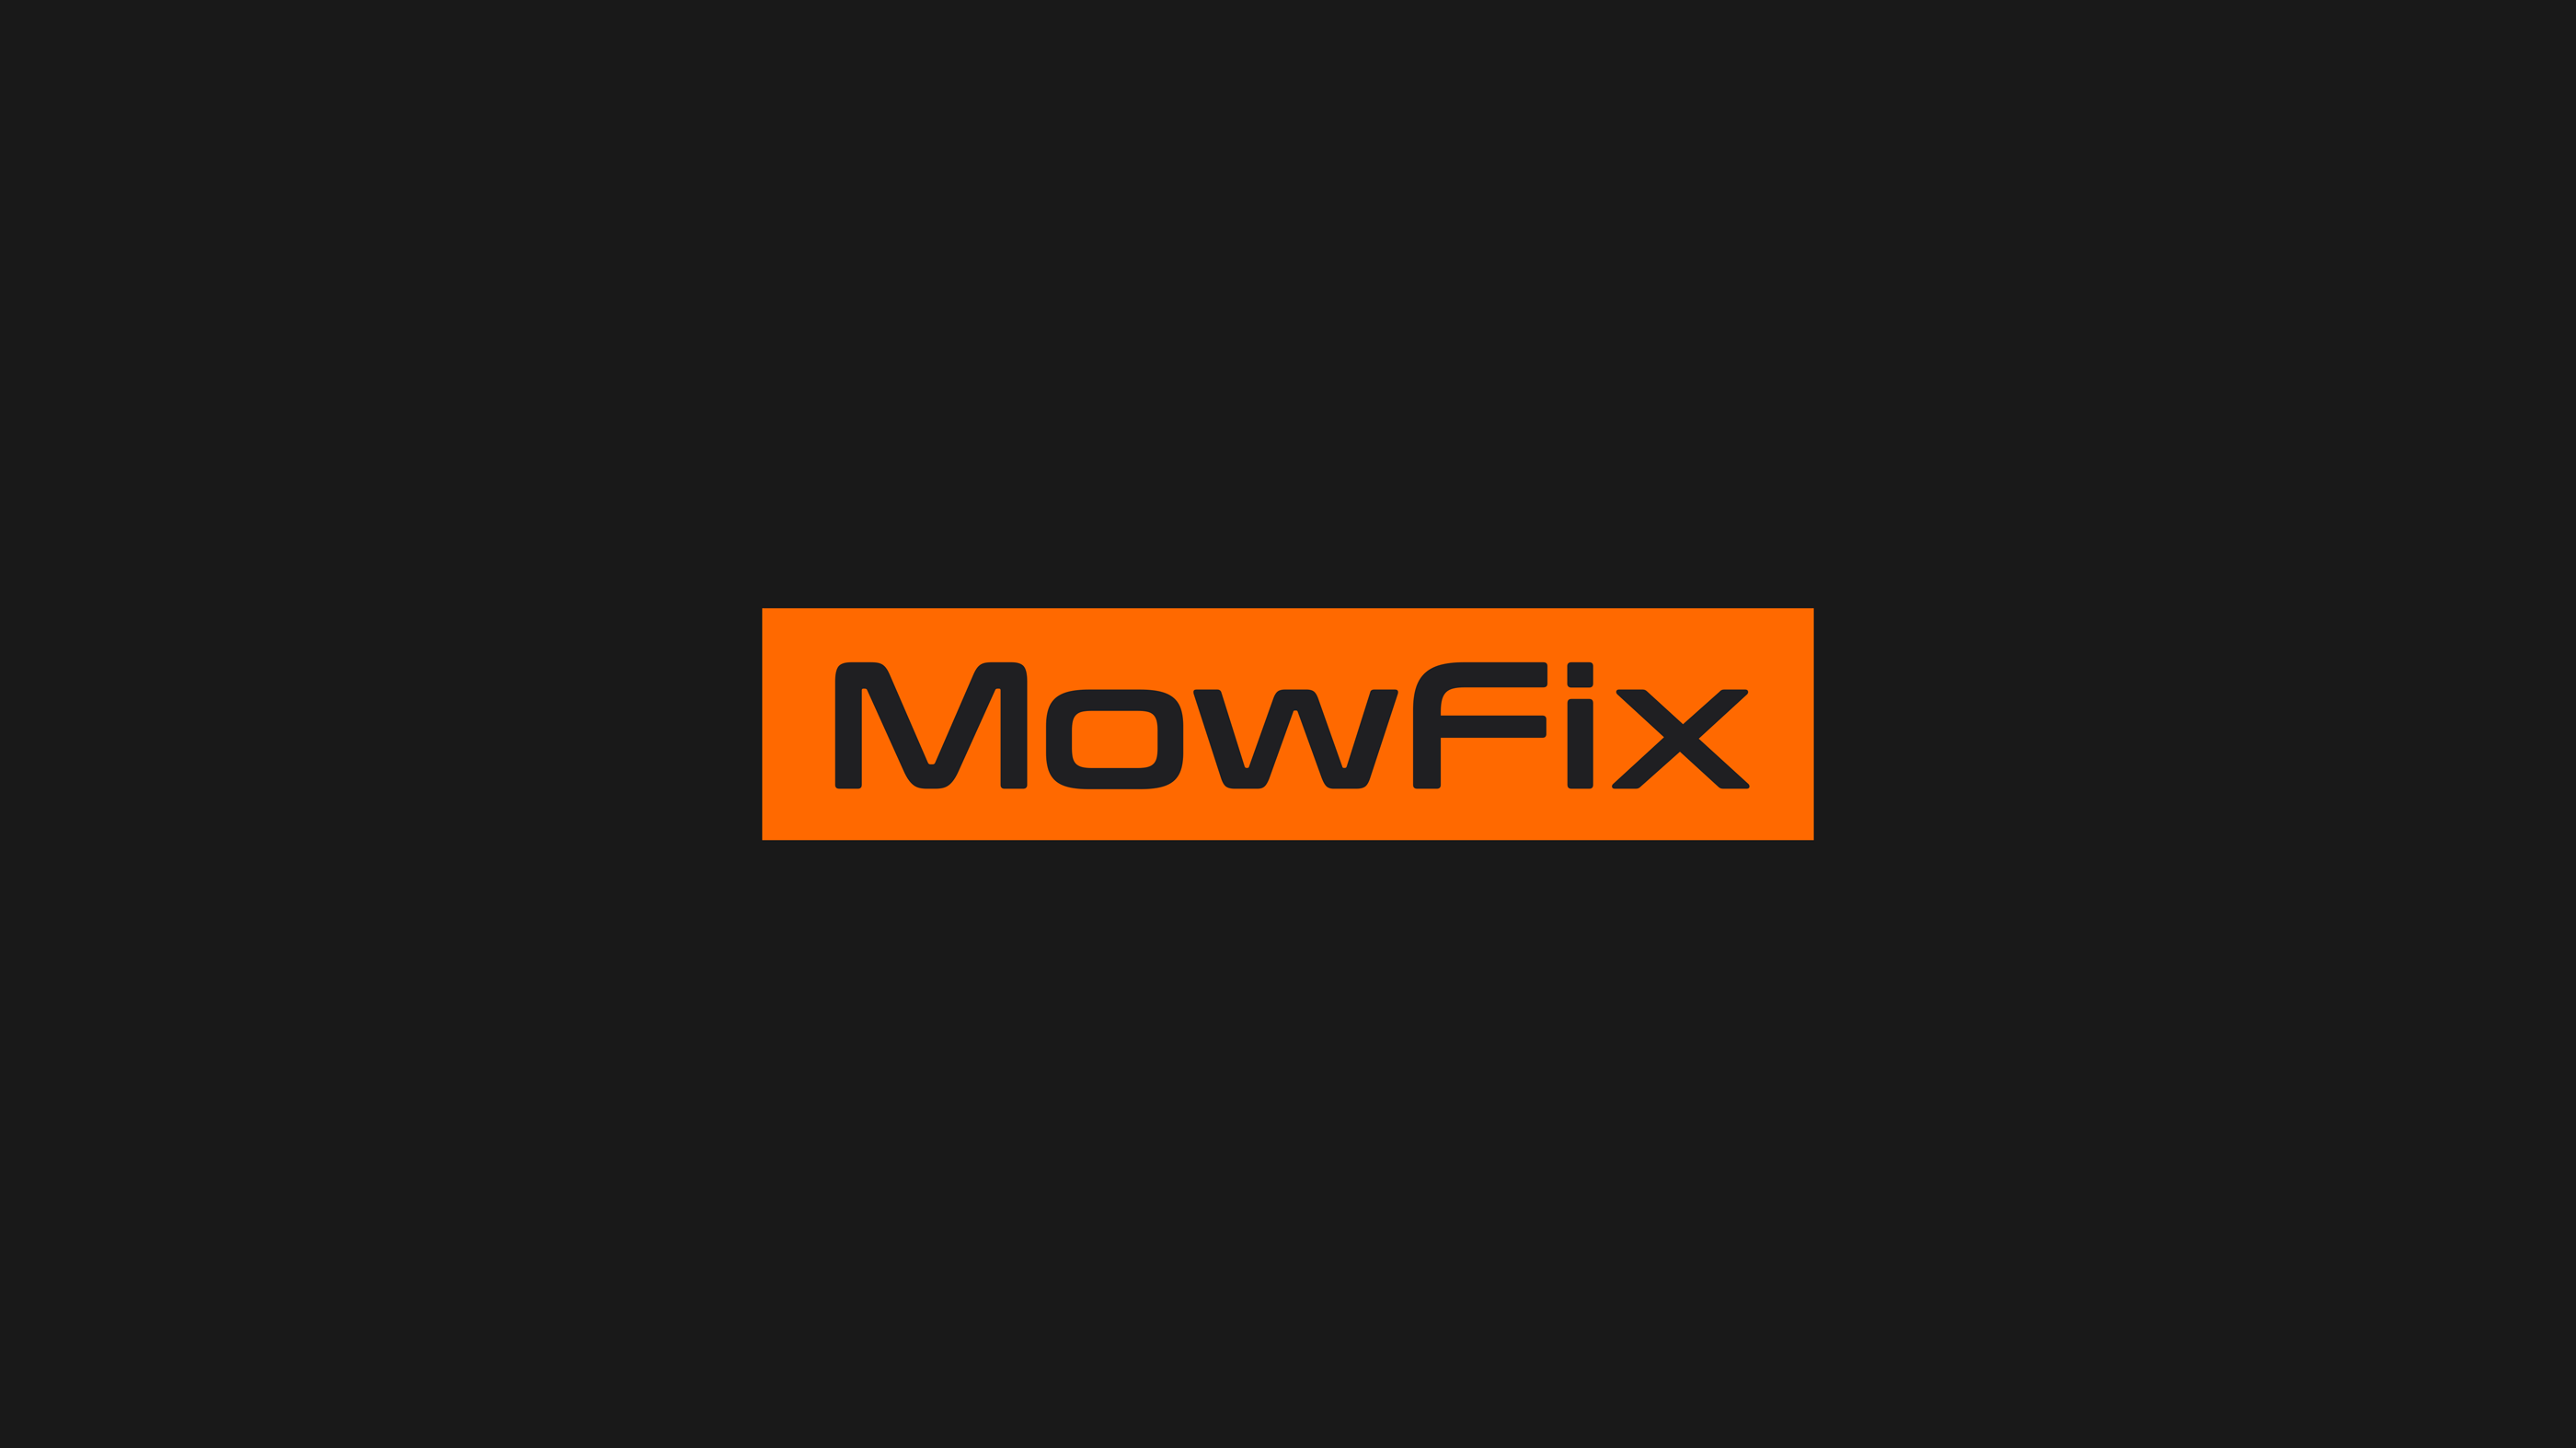 Mowfix Logo Design on Black Background, by Karbon Branding